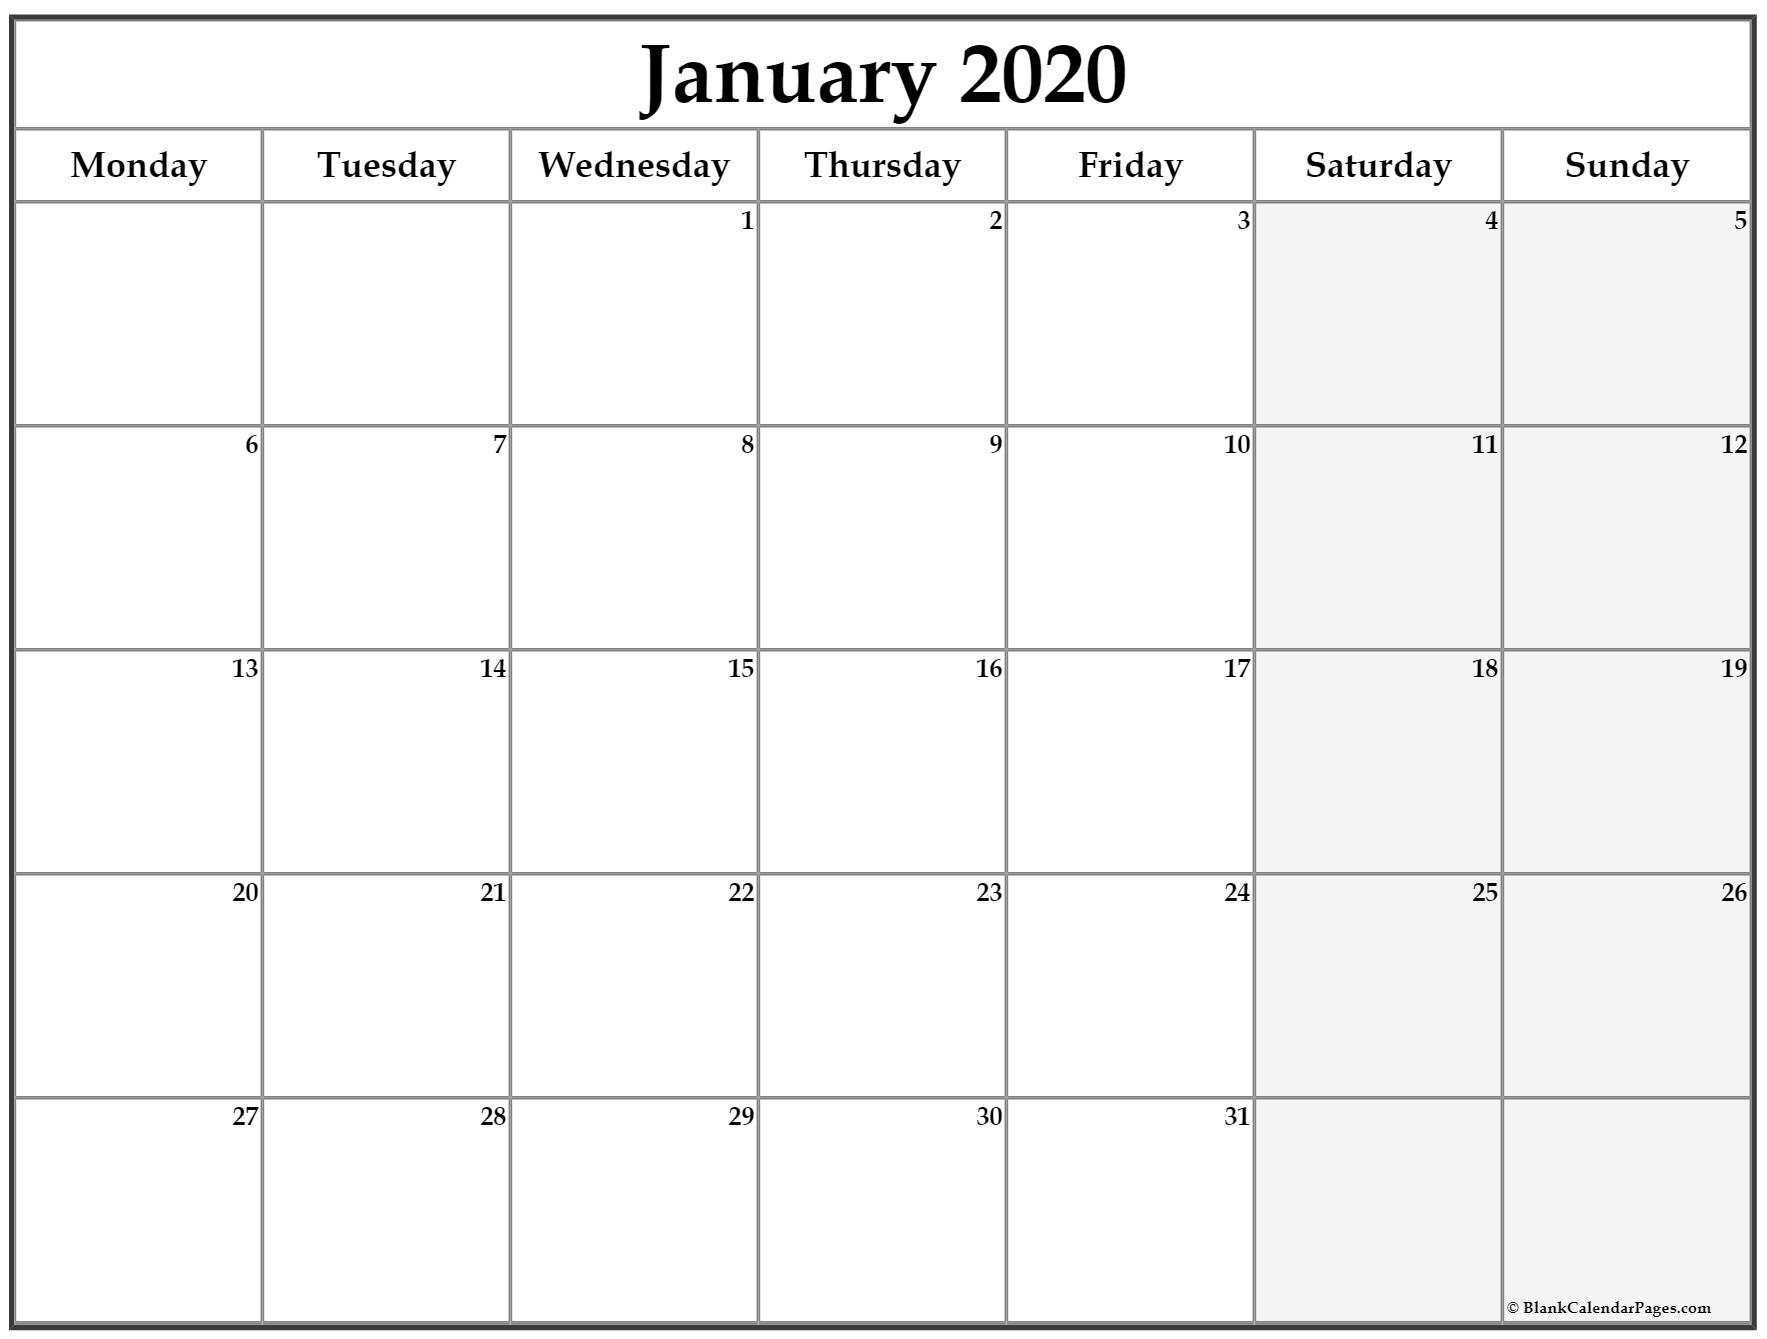 January 2020 Monday Calendar | Monday To Sunday inside Monday Thru Friday Calendar 2020 Printable